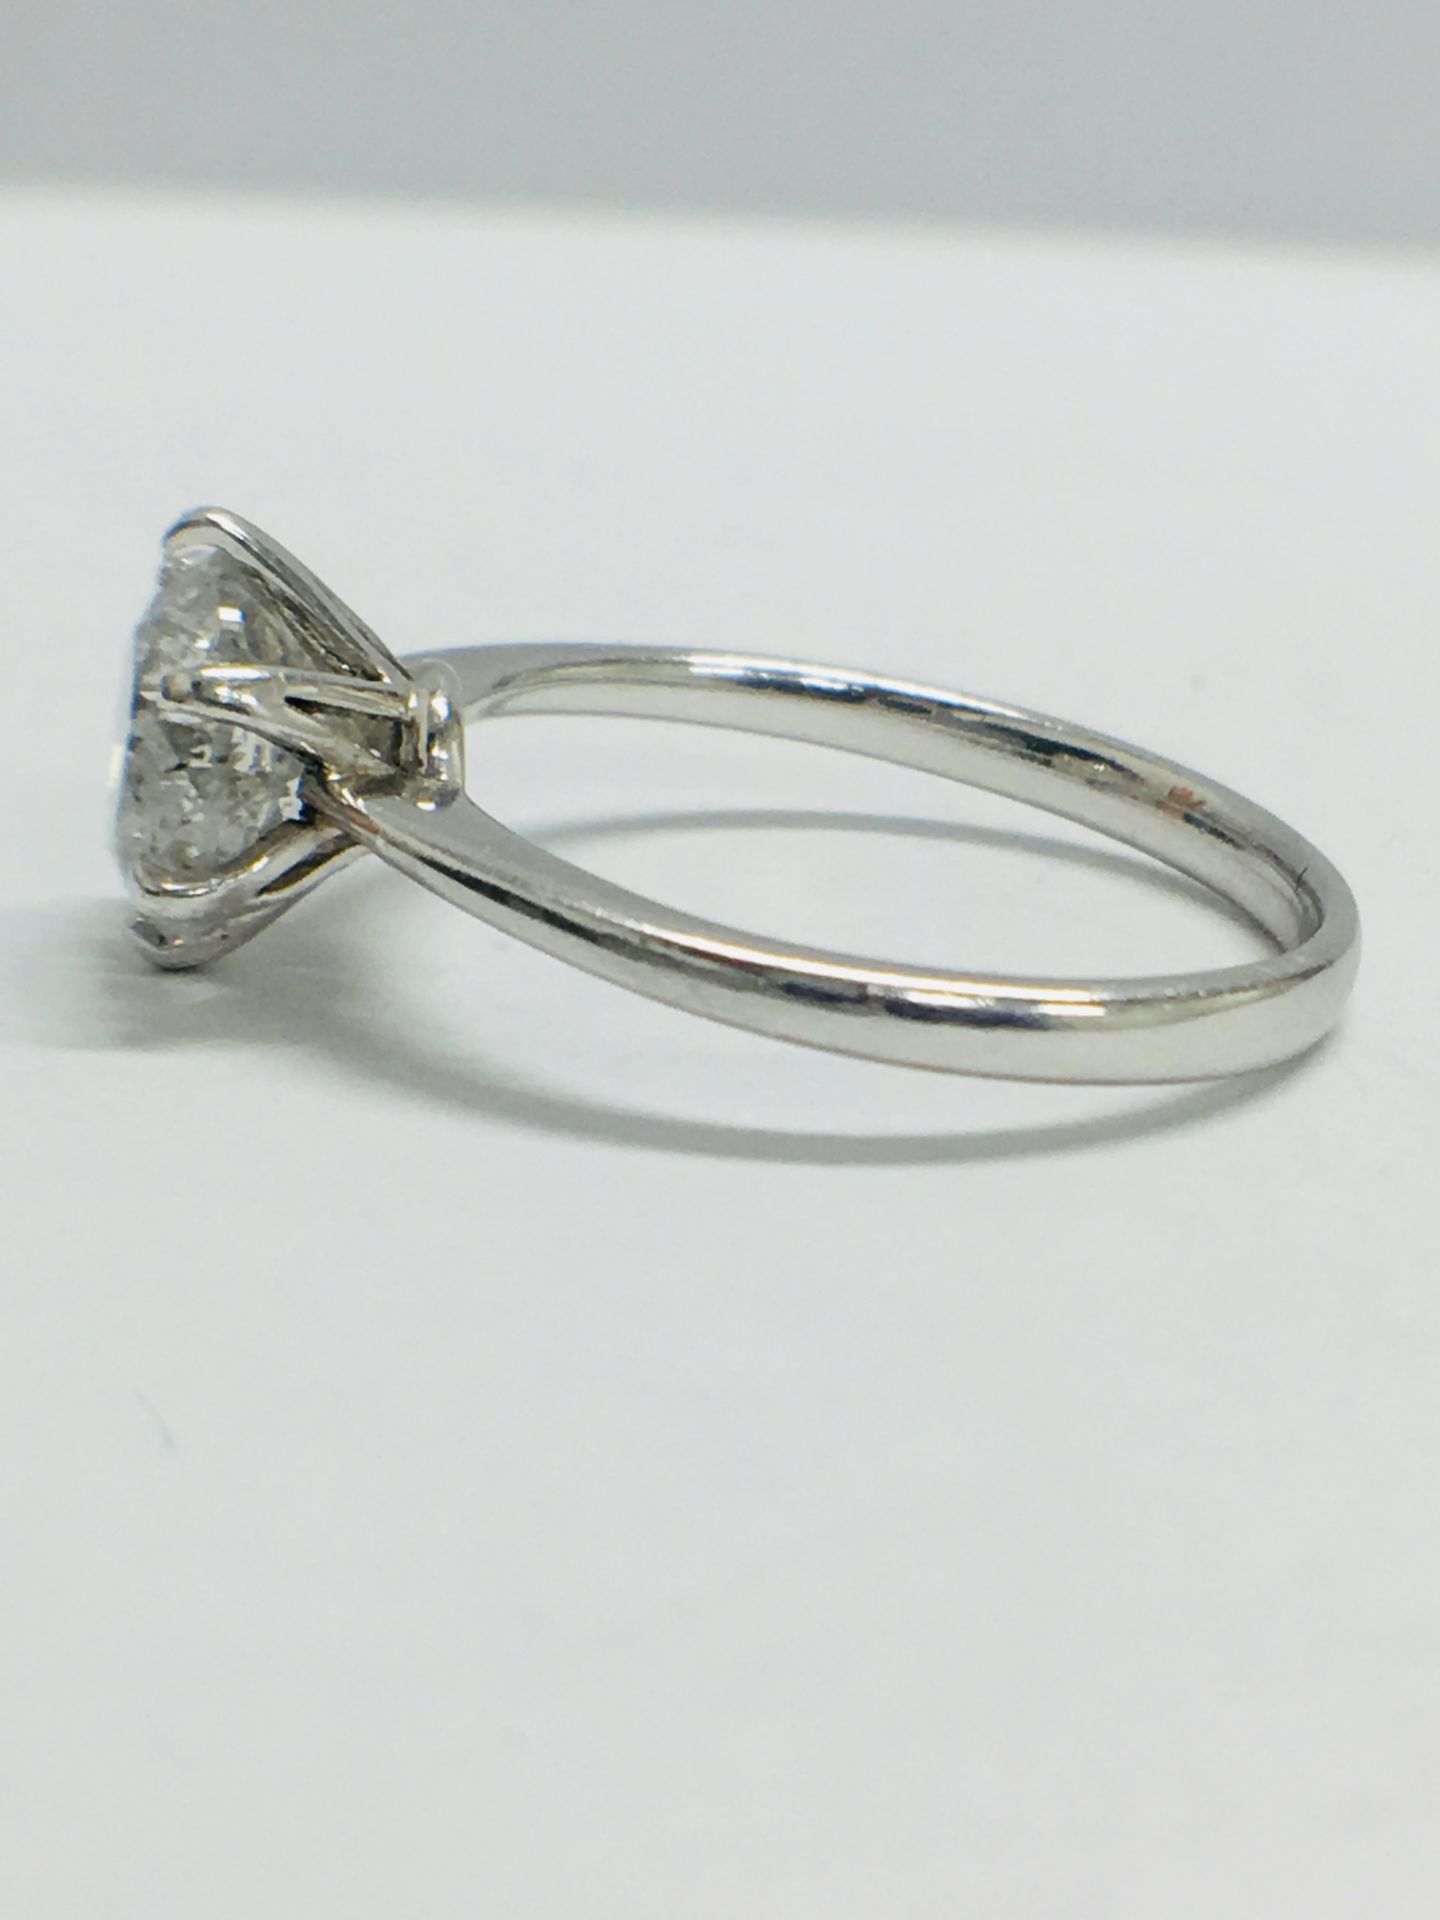 1.80Ct Diamond Solitaire Ring Set In Platinum Setting. - Image 3 of 10